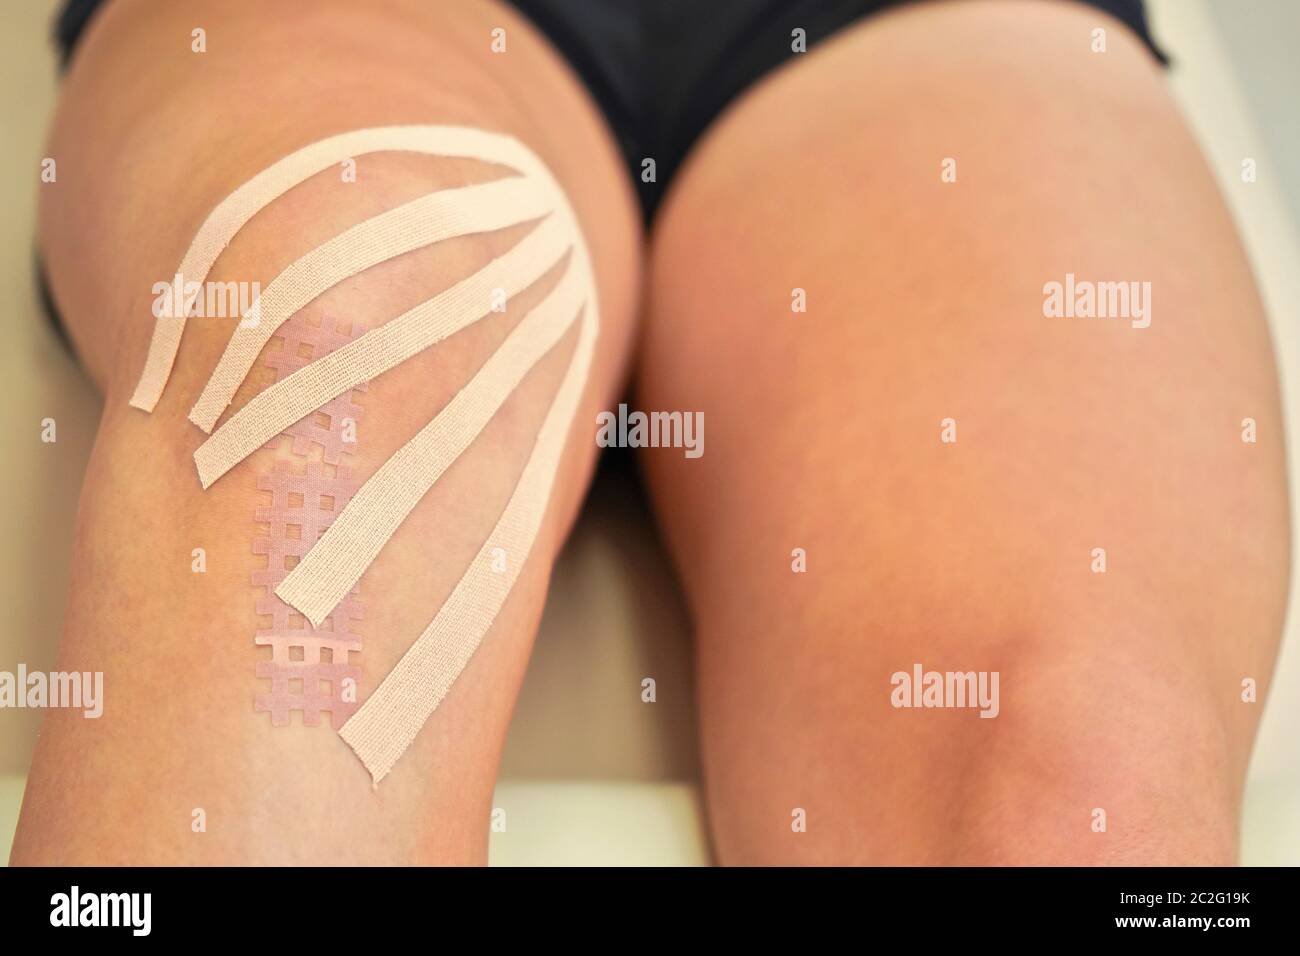 Knee treated with kinesio tex tape therapy Stock Photo - Alamy